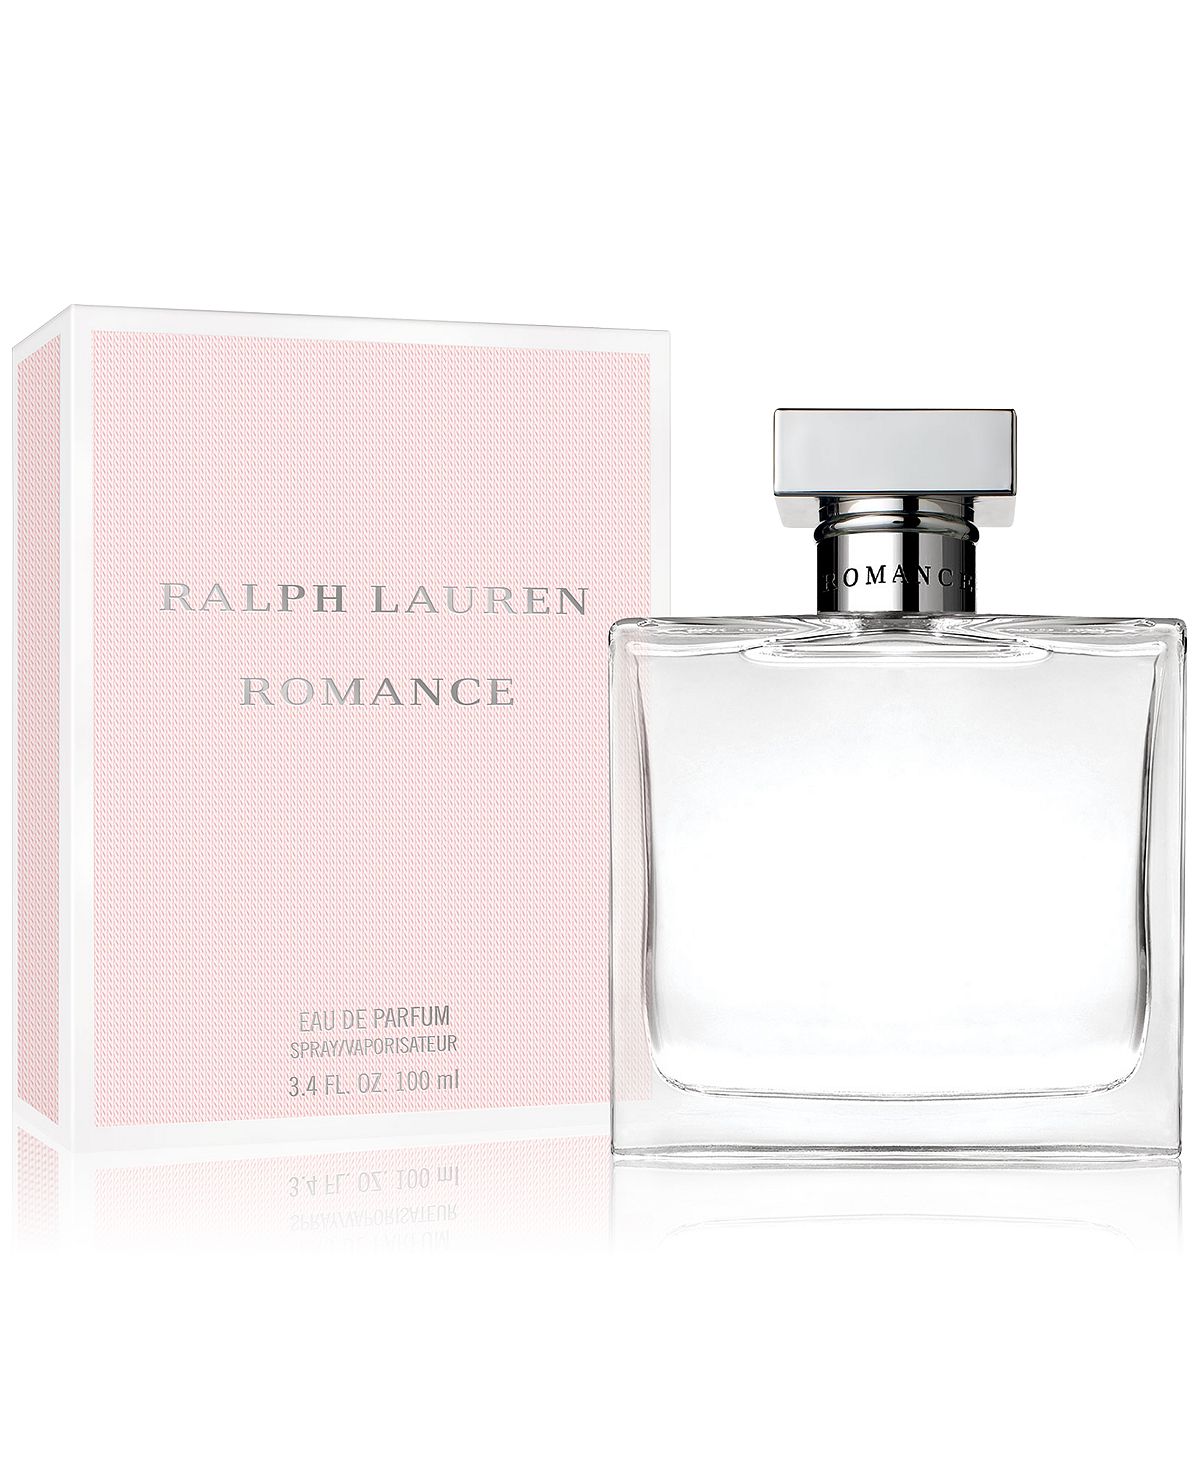 Romance by Ralph Lauren 3.4 oz EDP Spray W